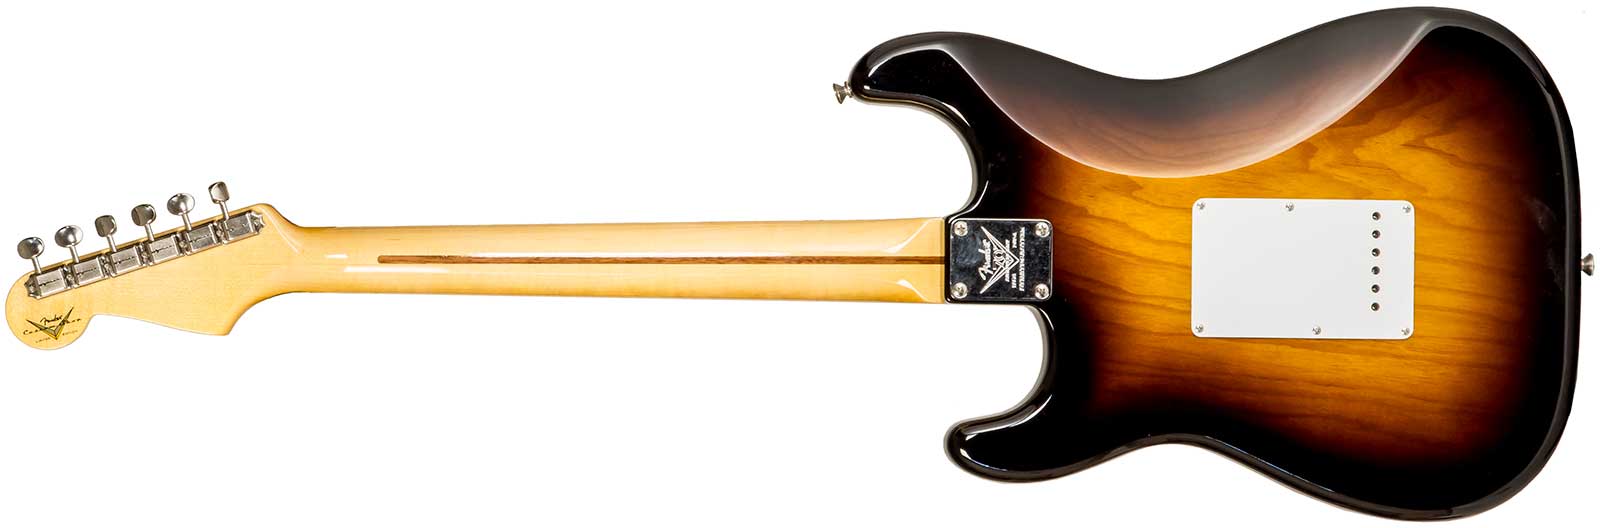 Fender Custom Shop Strat 1954 70th Anniv. #xn4597 3s Trem Mn - Time Capsule 2-color Sunburst - E-Gitarre in Str-Form - Variation 1